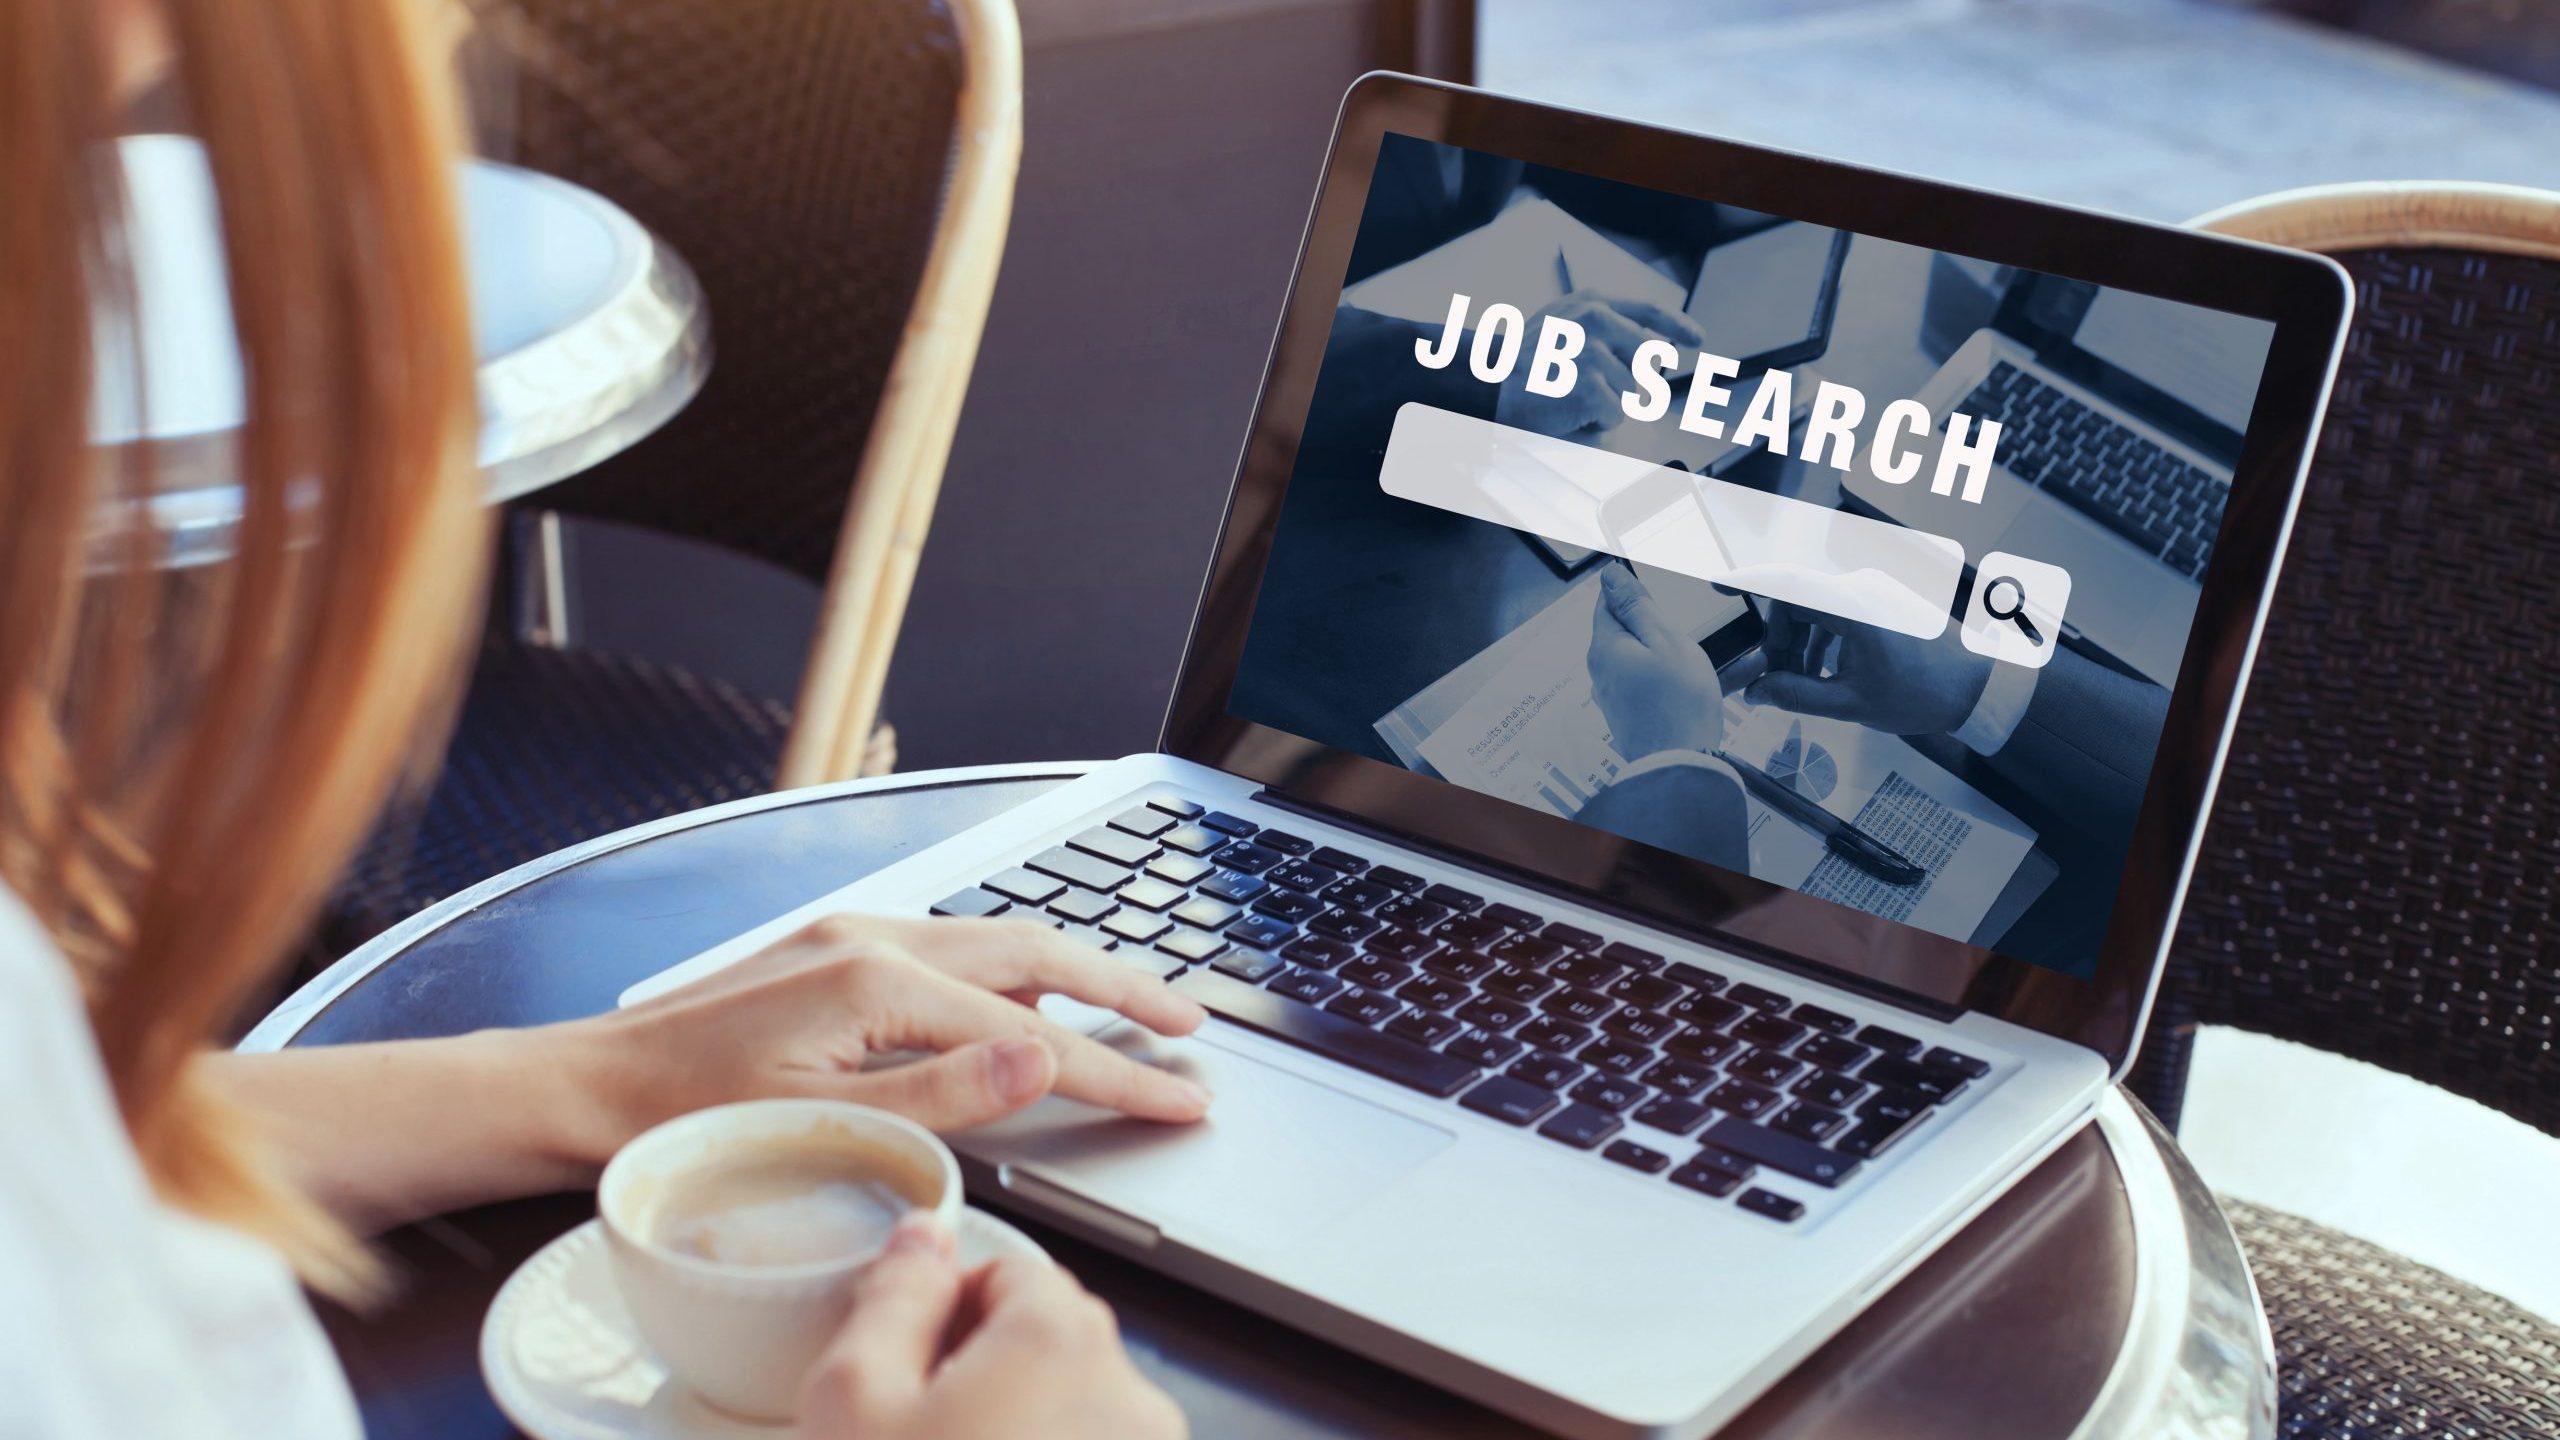 Job seeker looks for jobs online